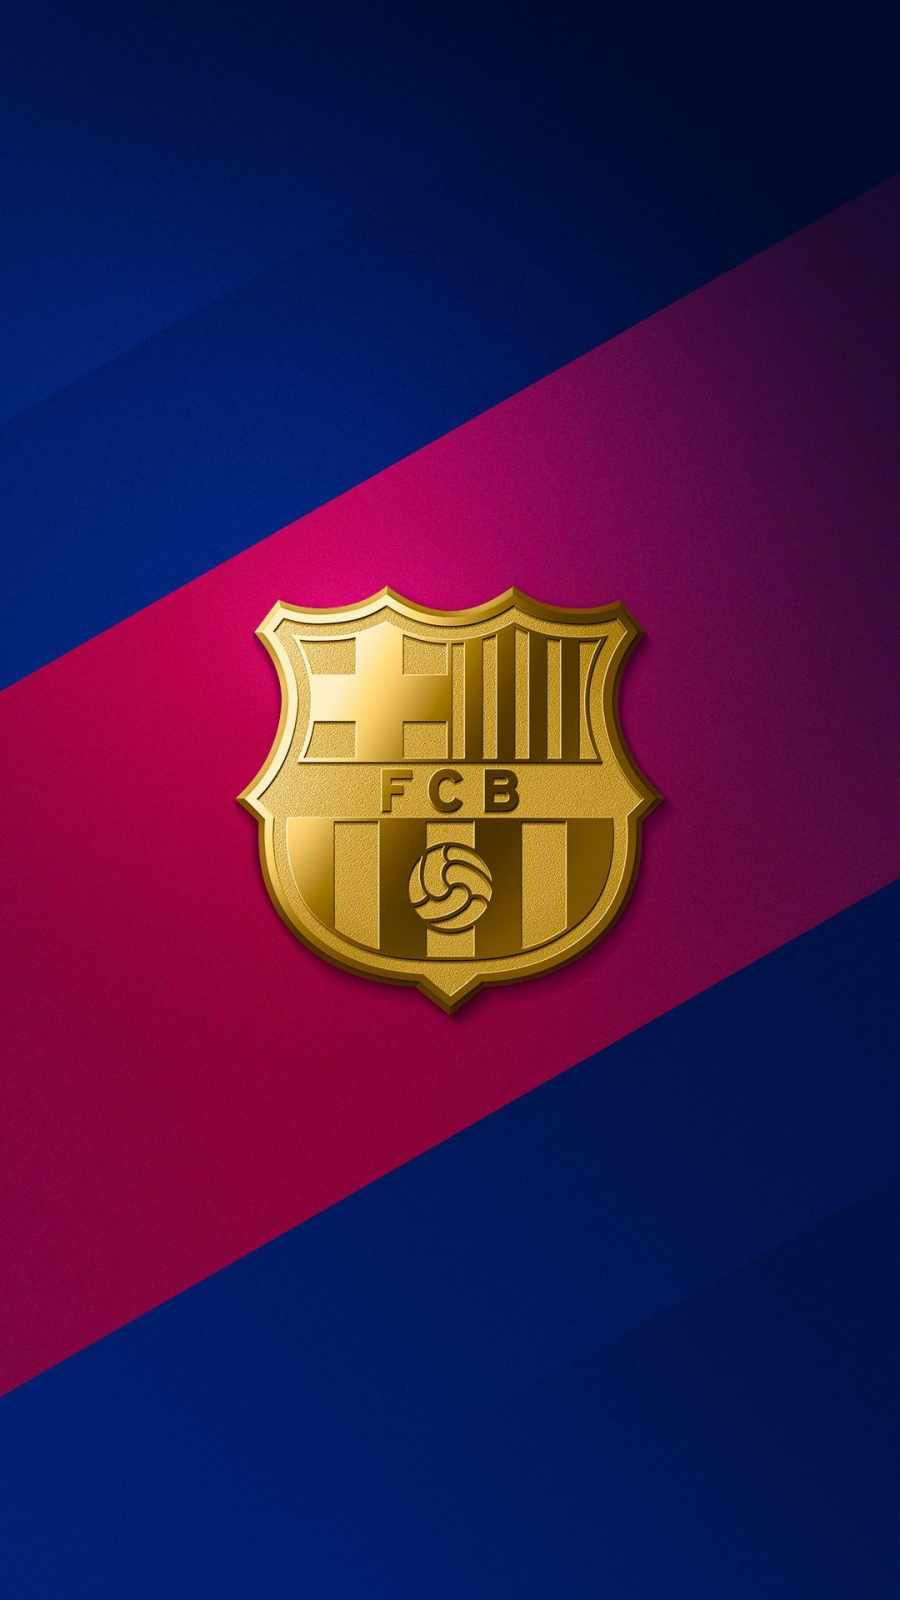 FC Barcelona Football IPhone Wallpaper Wallpaper, iPhone Wallpaper